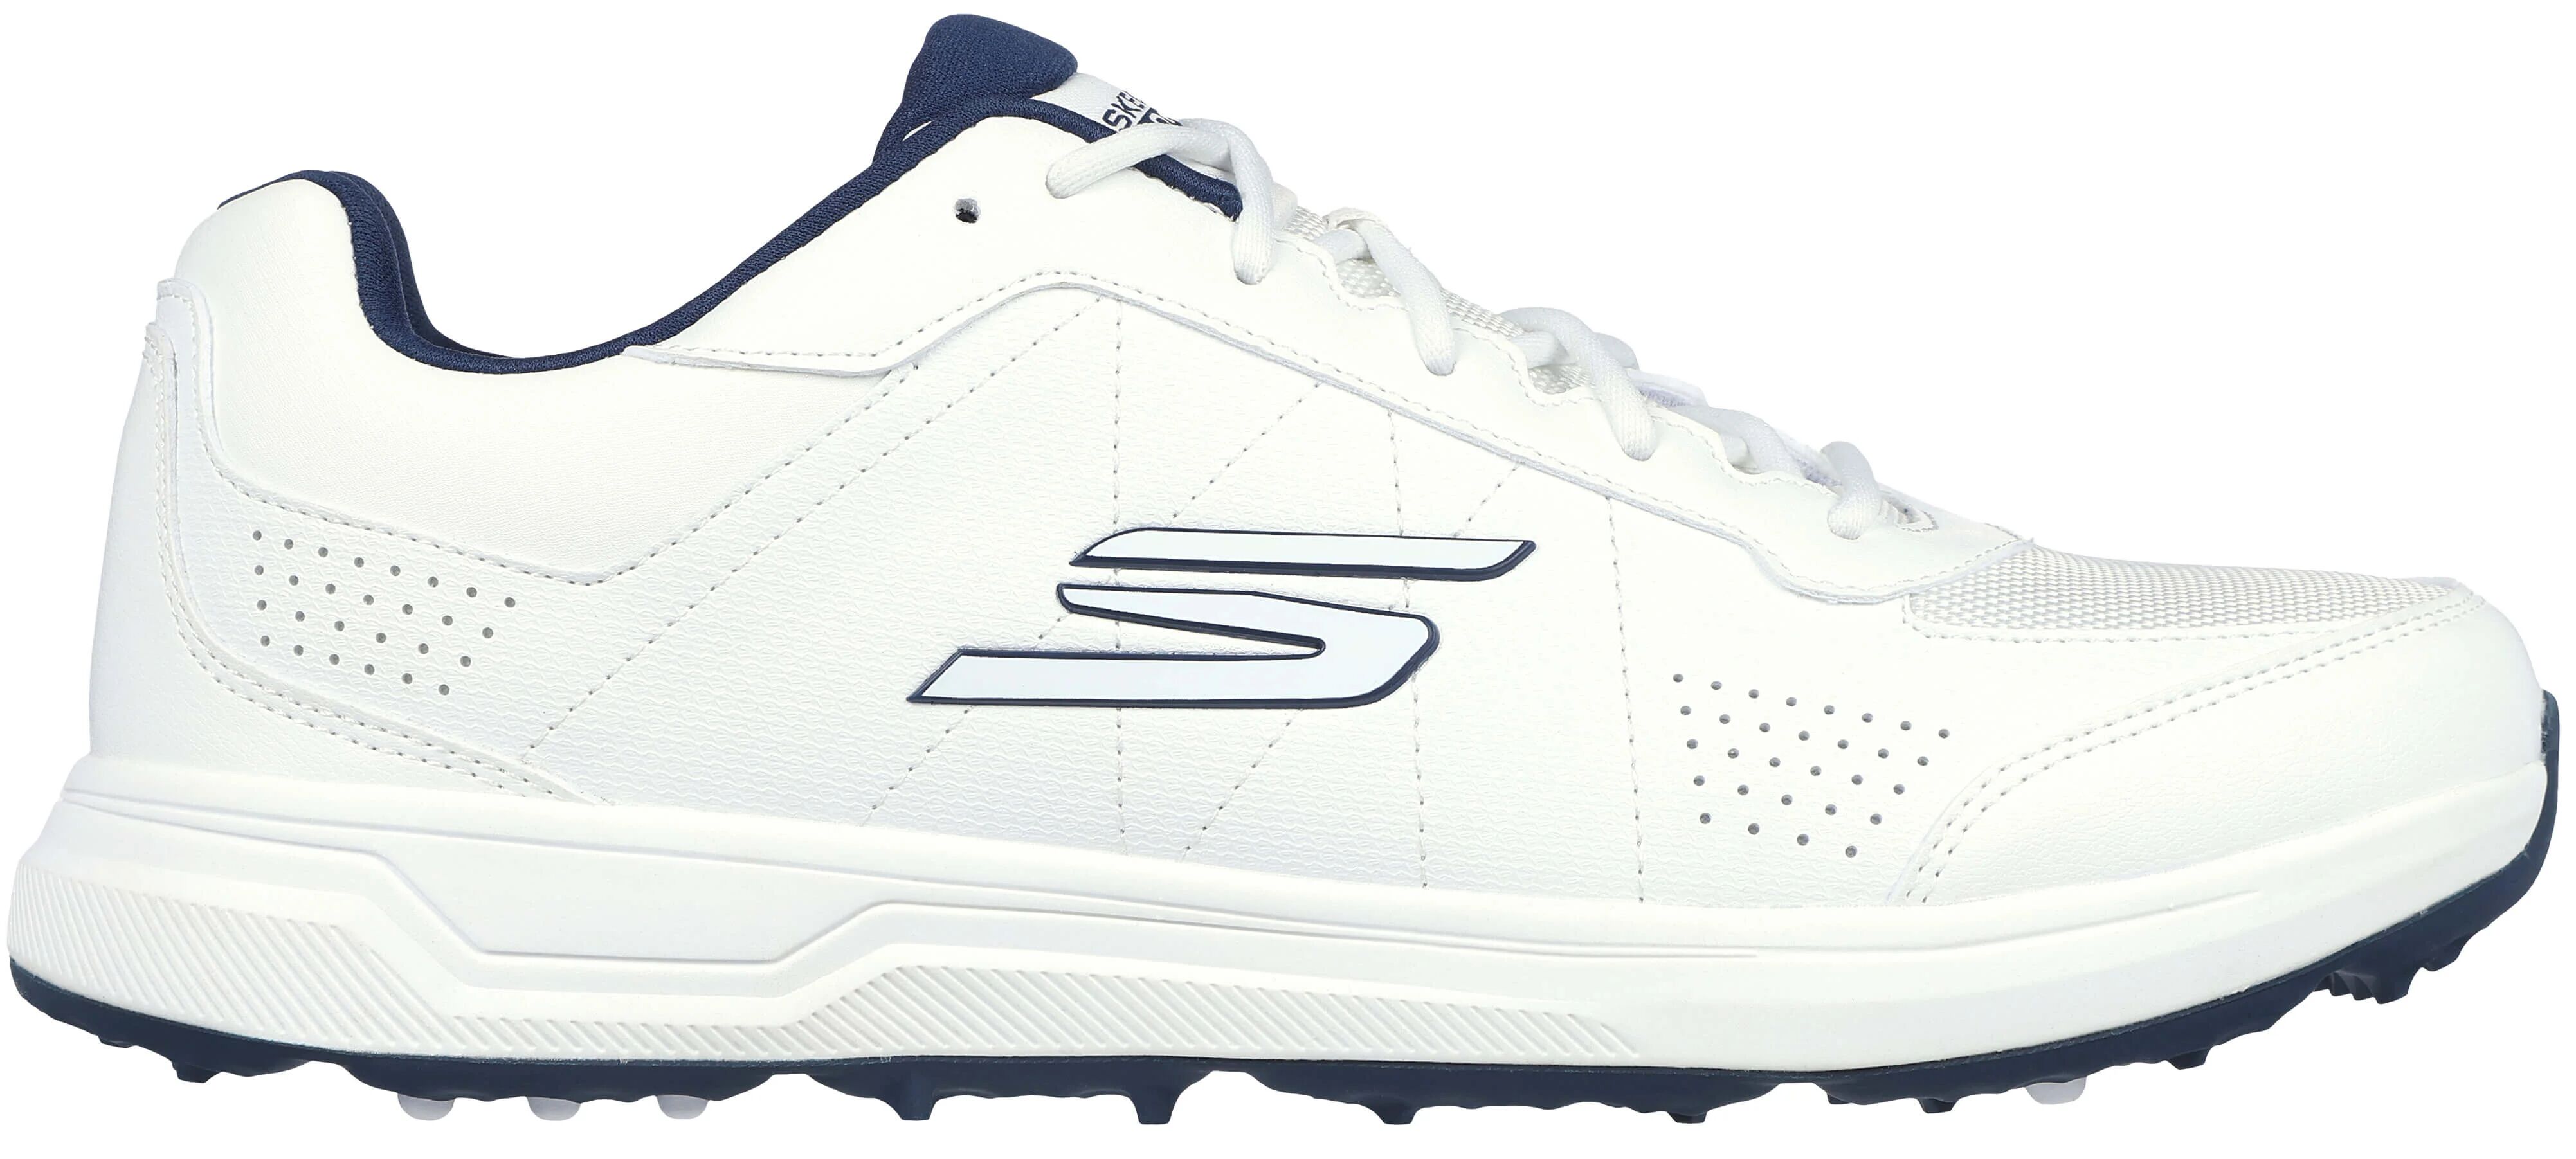 Skechers GO GOLF Prime Golf Shoes - White/Navy - 11.5 - MEDIUM